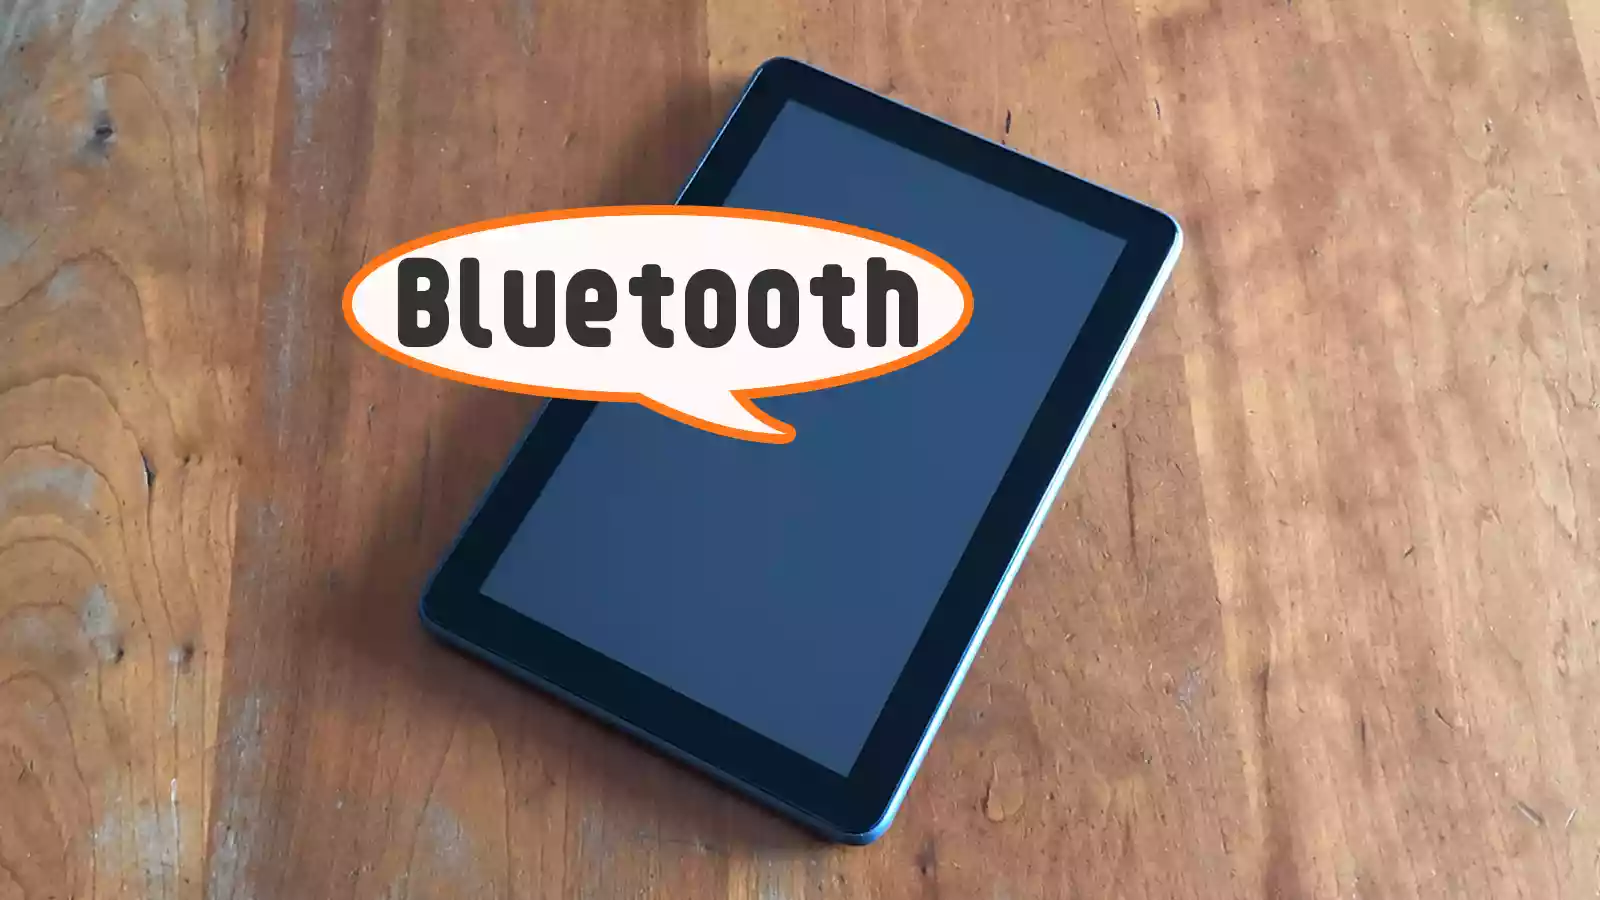 Amazon Fireタブレット Bluetooth Wi-Fi ペアリング 接続 解除